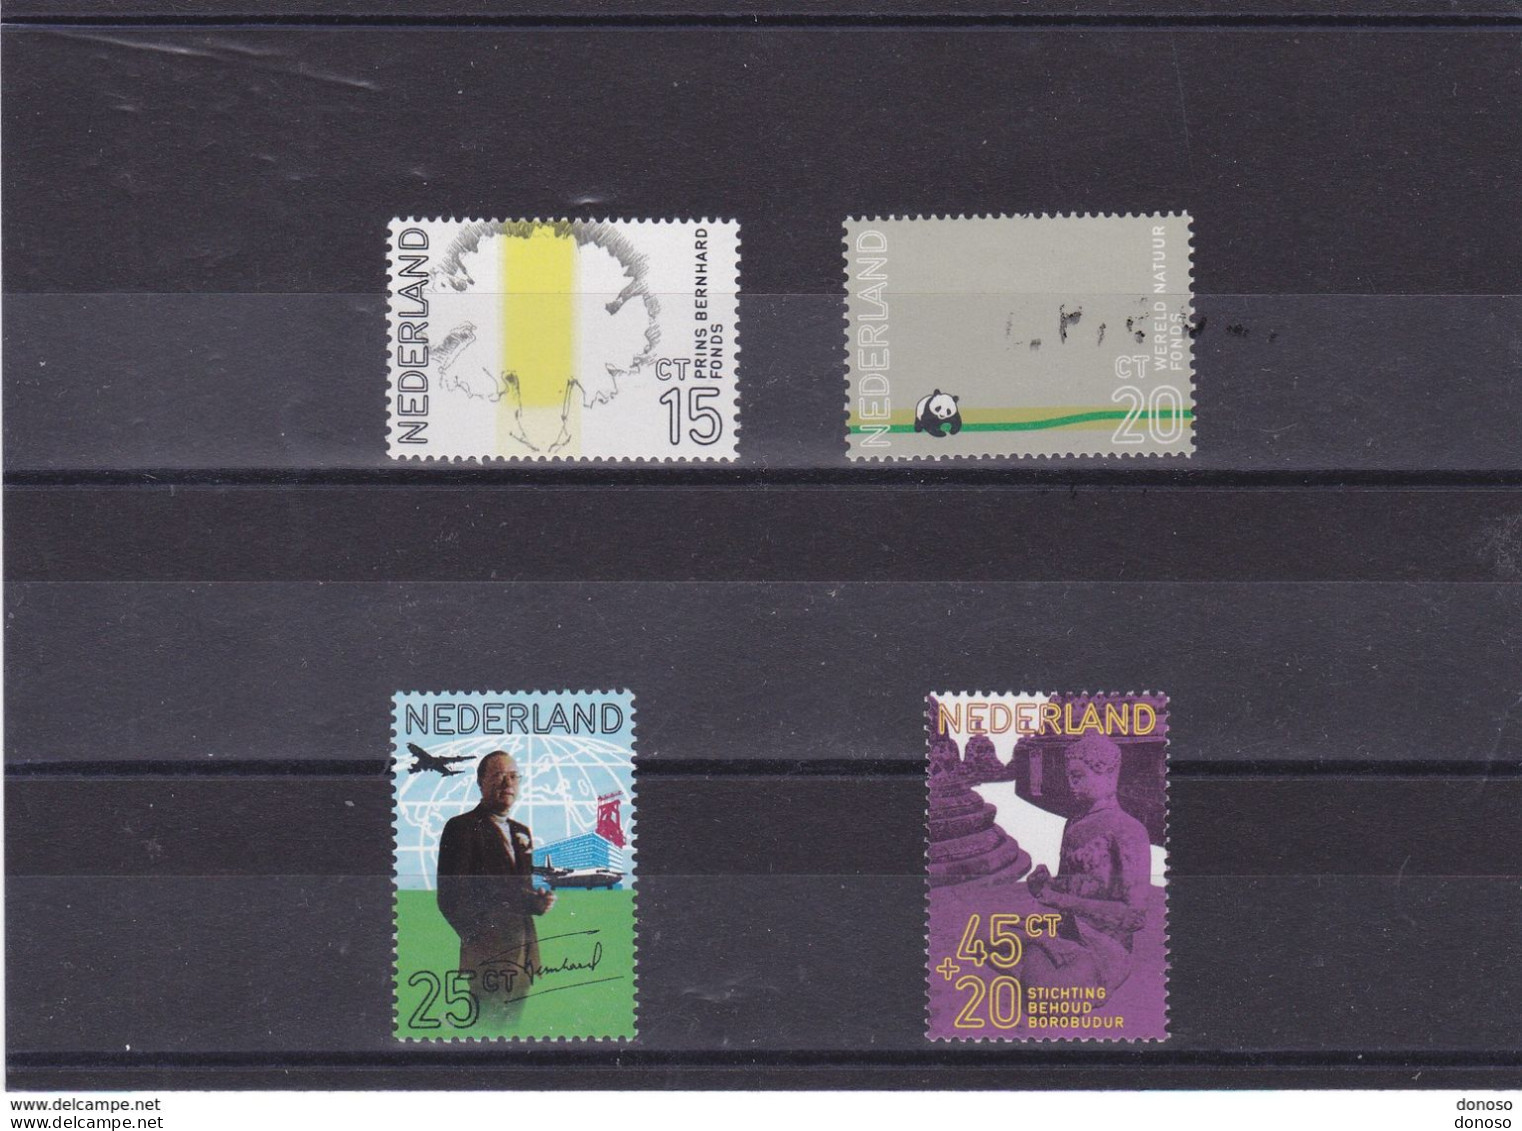 PAYS BAS 1971 PRINCE BERNHARD Yvert 934-937, Michel 965-968 NEUF** MNH Cote 5,50 Euros - Unused Stamps